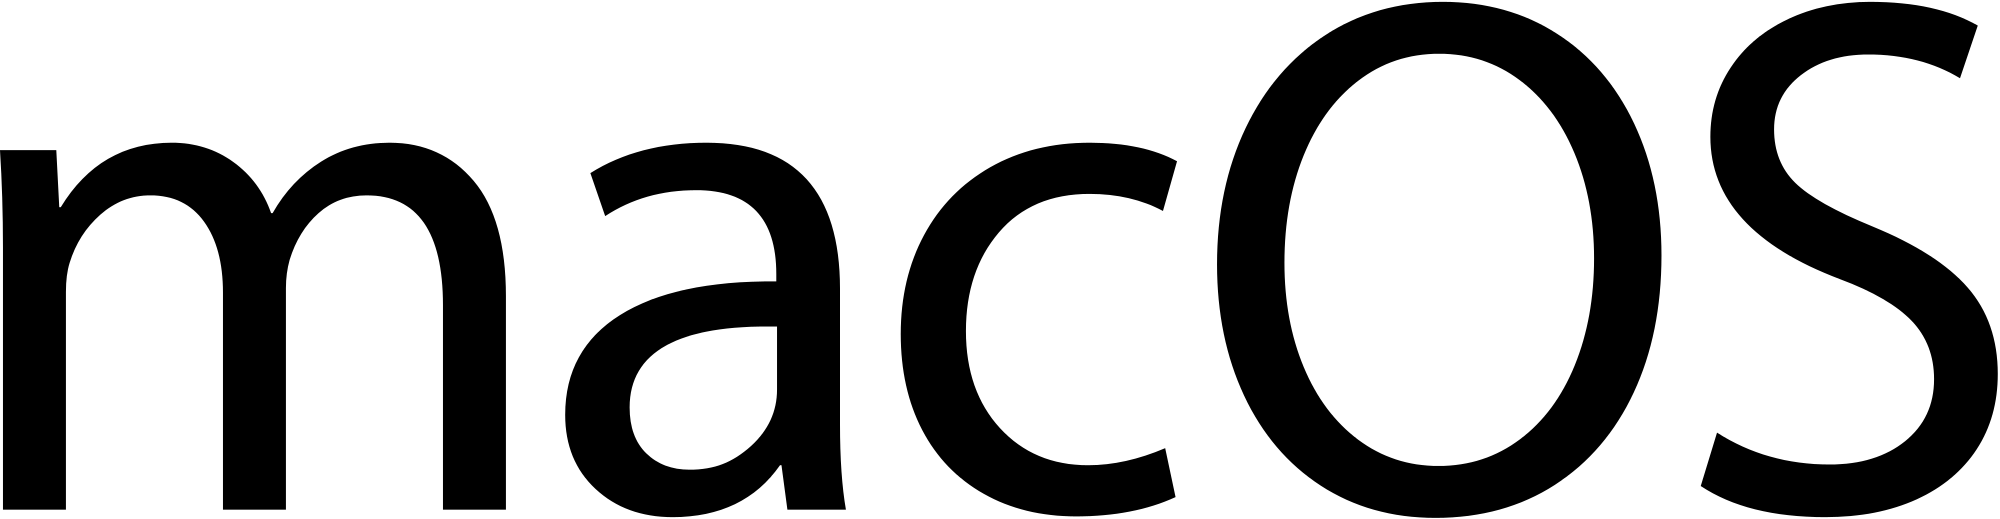 Open - Mac Os Black Logo (2000x519)